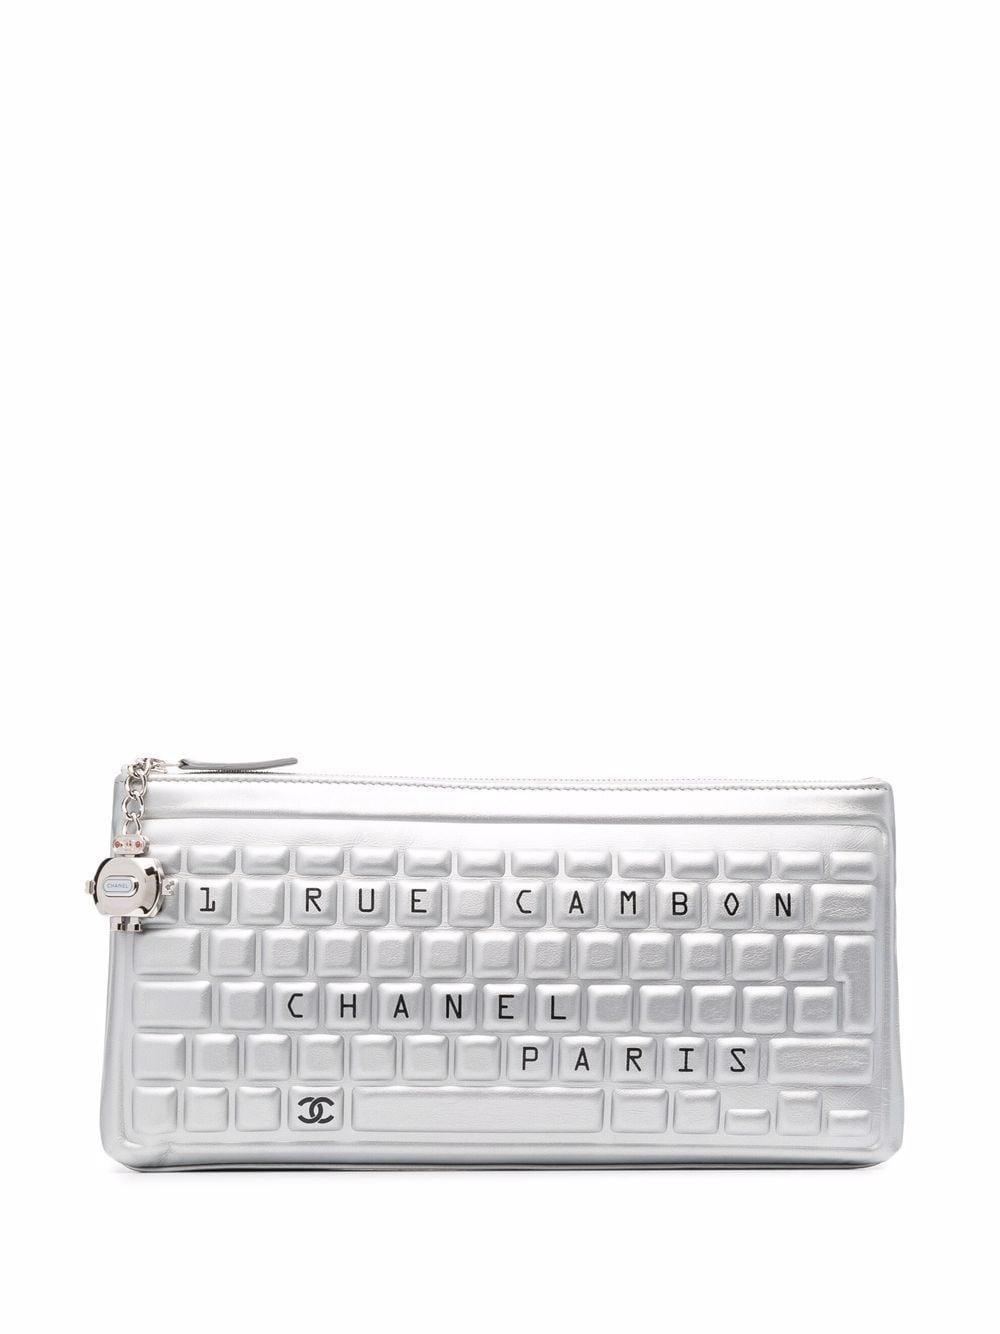 Chanel Rare Metallic Silver Data Center Novelty Minaudière Keyboard Clutch  For Sale 4